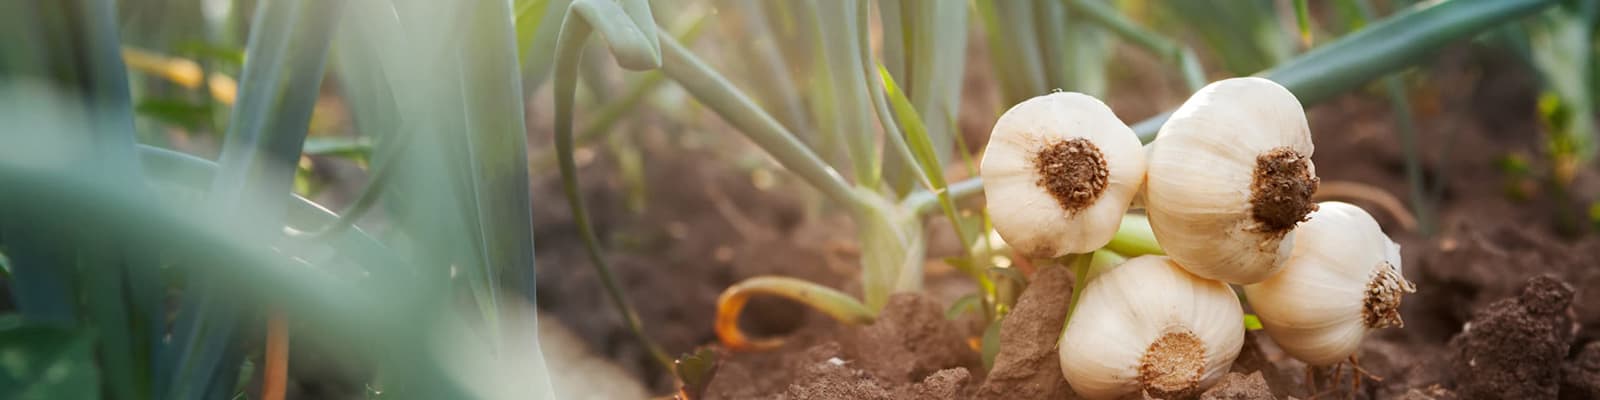 How is Garlic Grown?